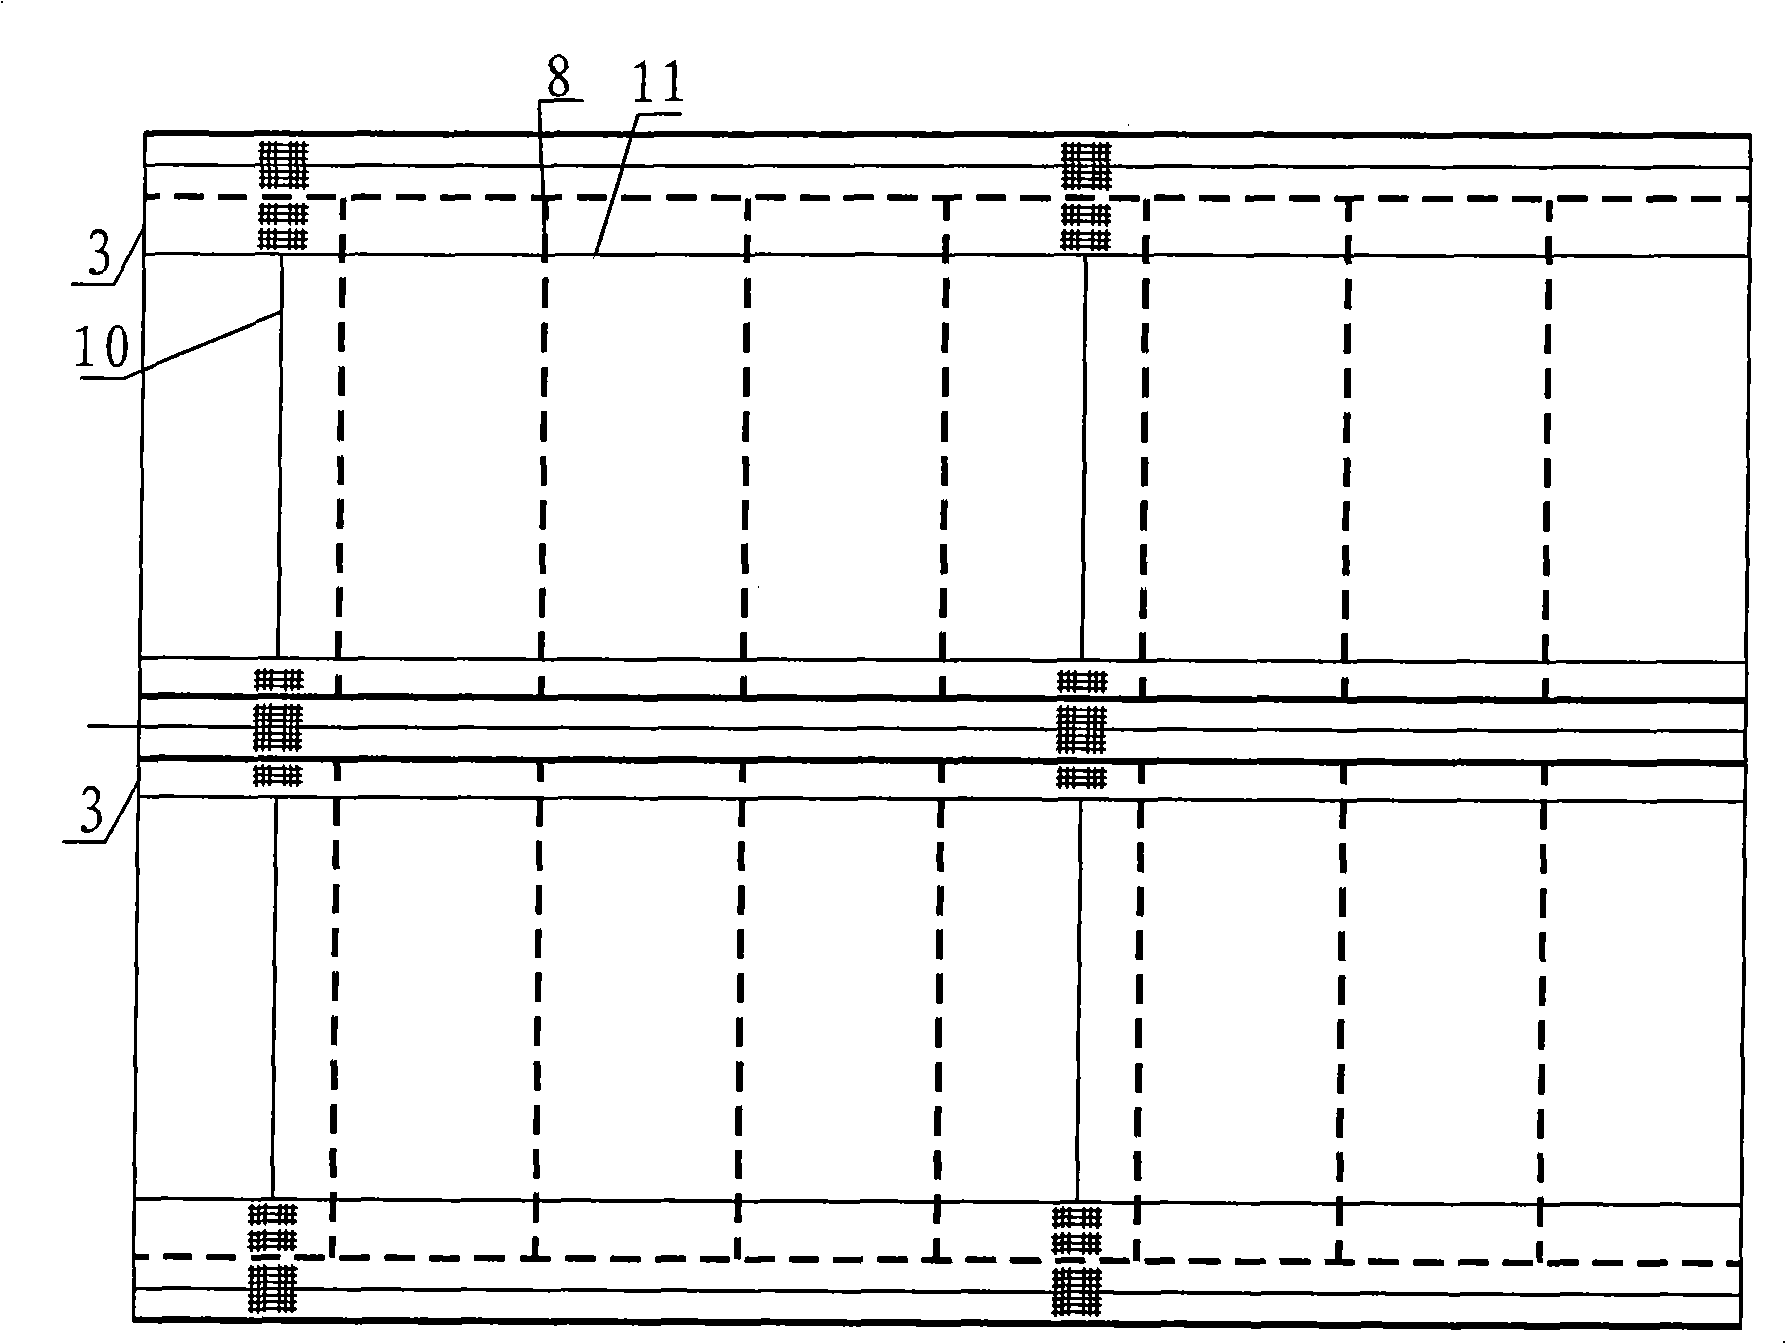 High-speed railway orthotropic slab integral steel deck construction